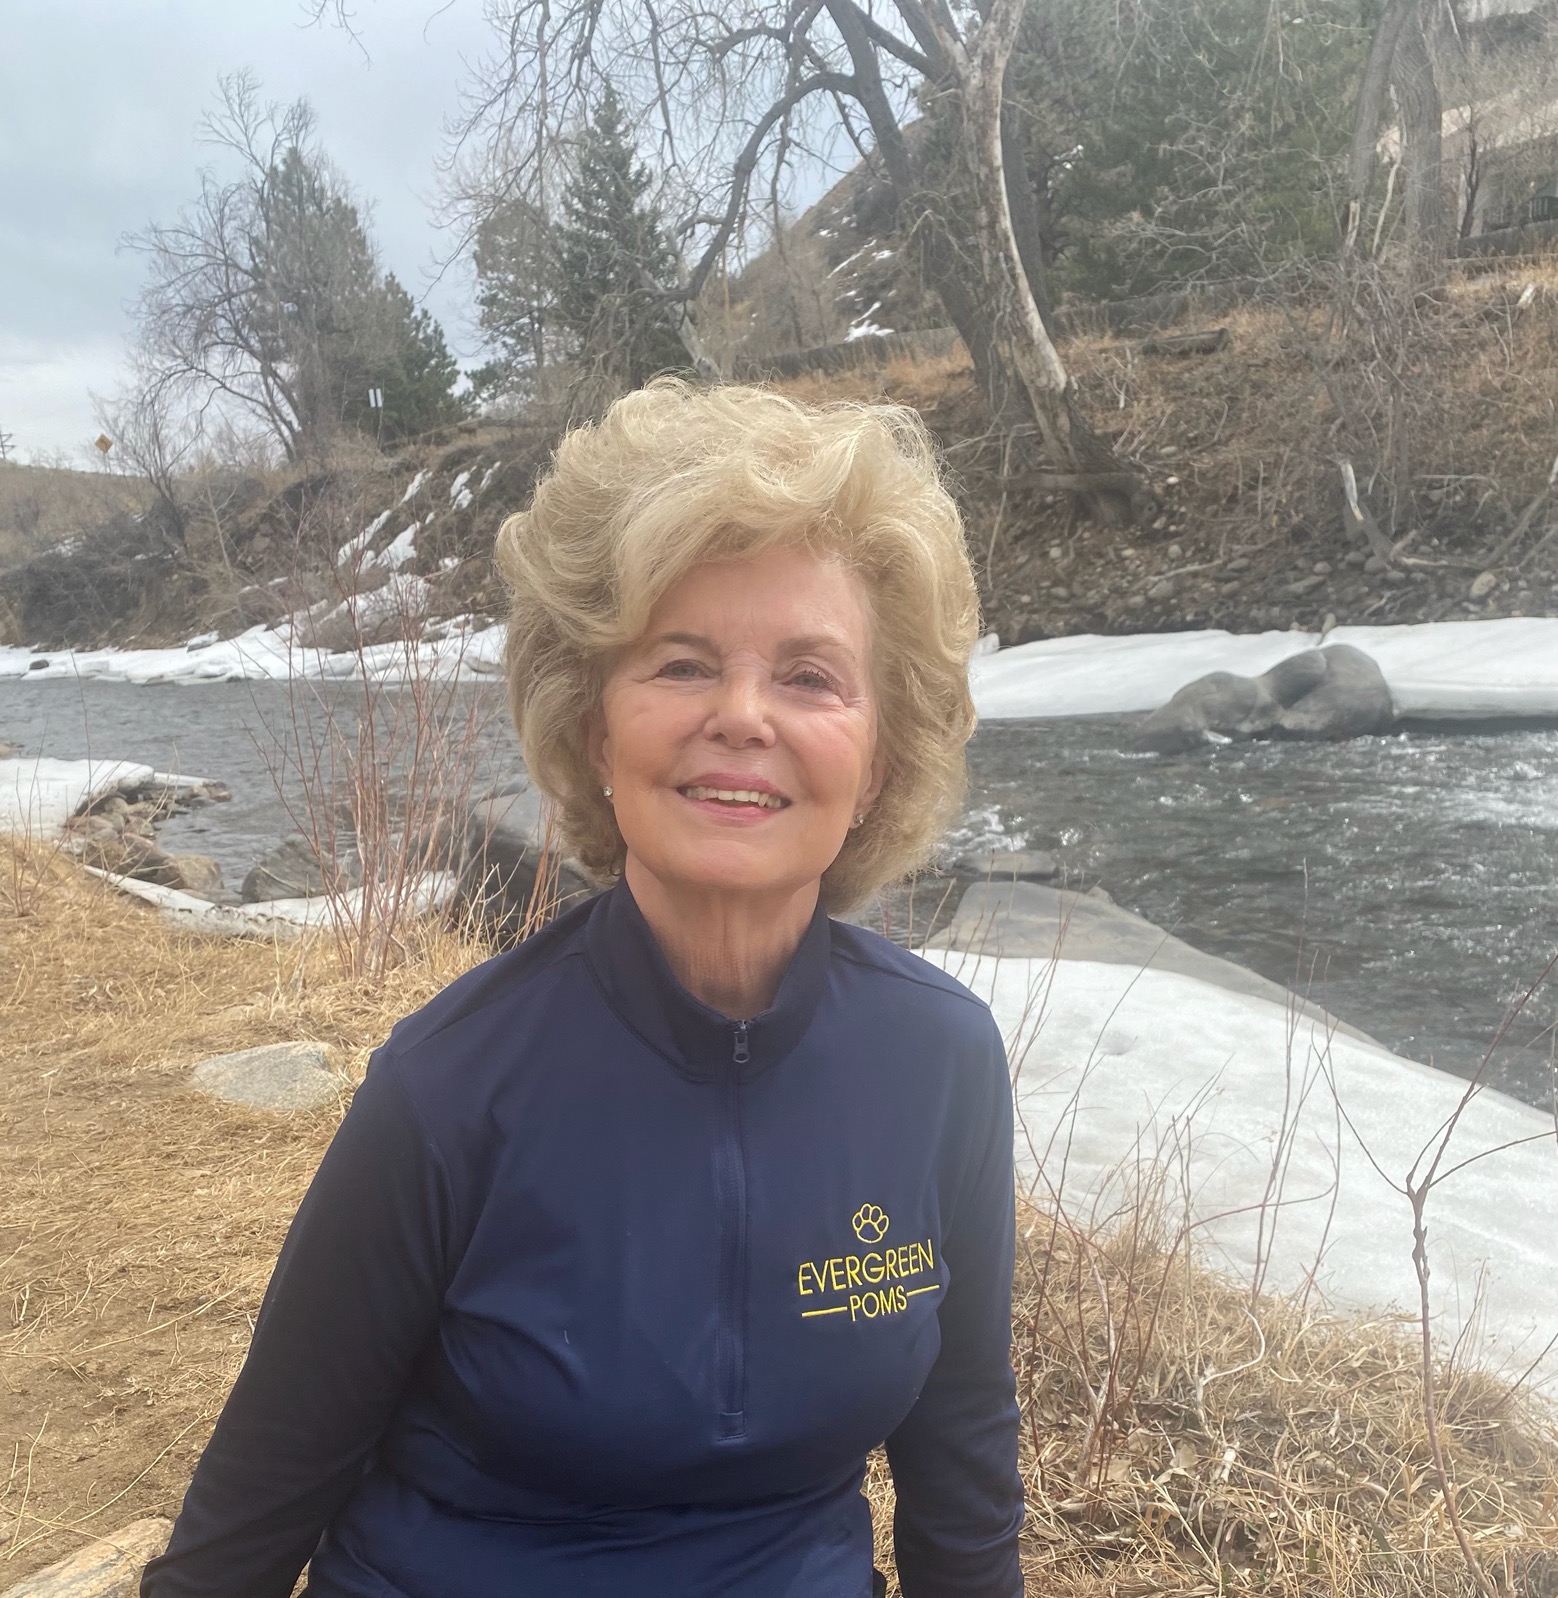 Environment Colorado member Phyllis Updike